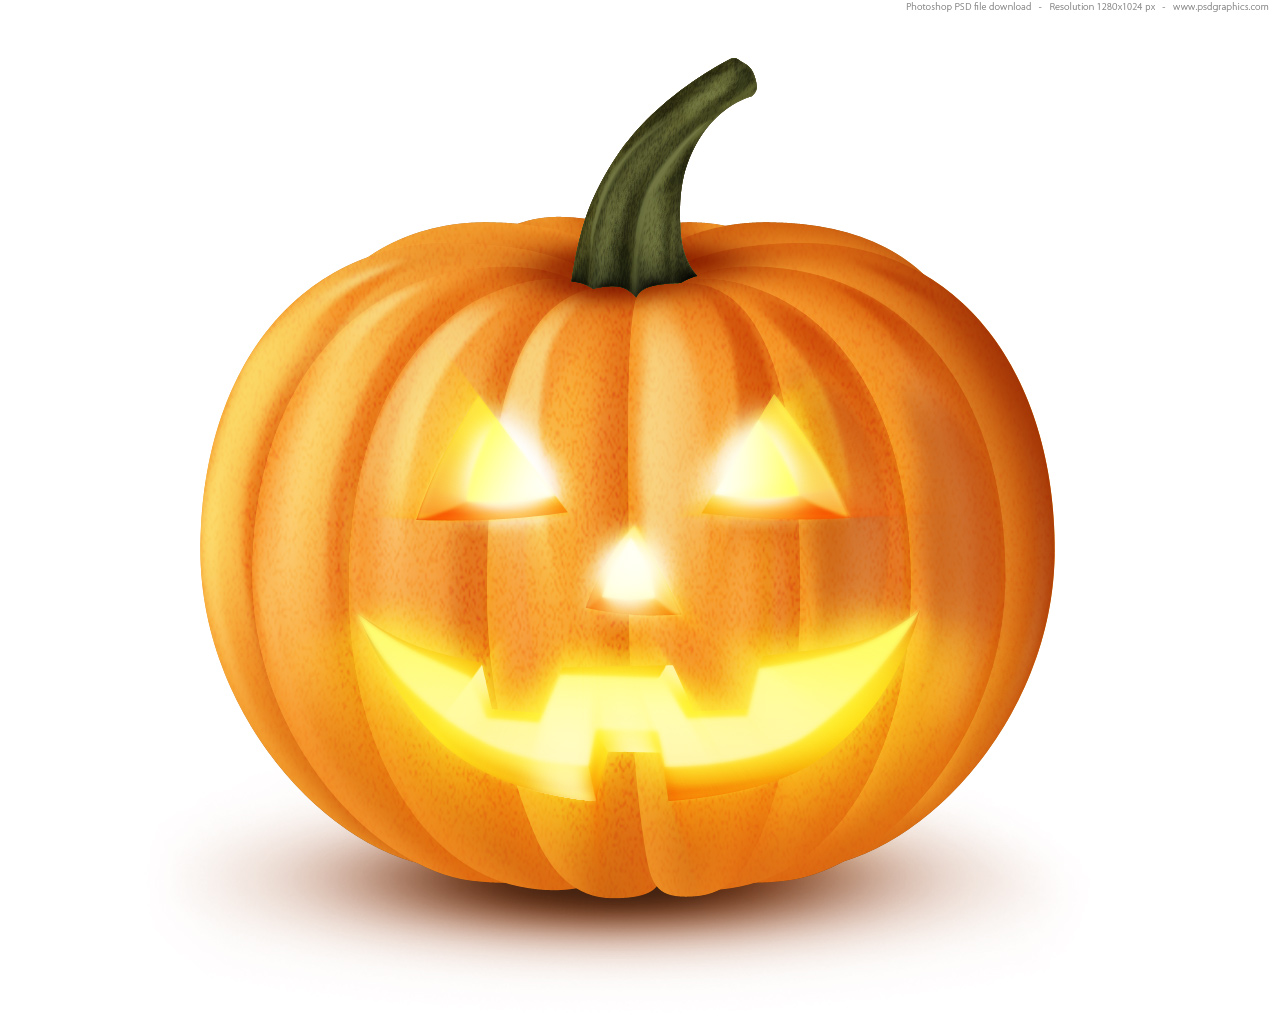 Jack O' Lantern, Halloween pumpkin icon (PSD)